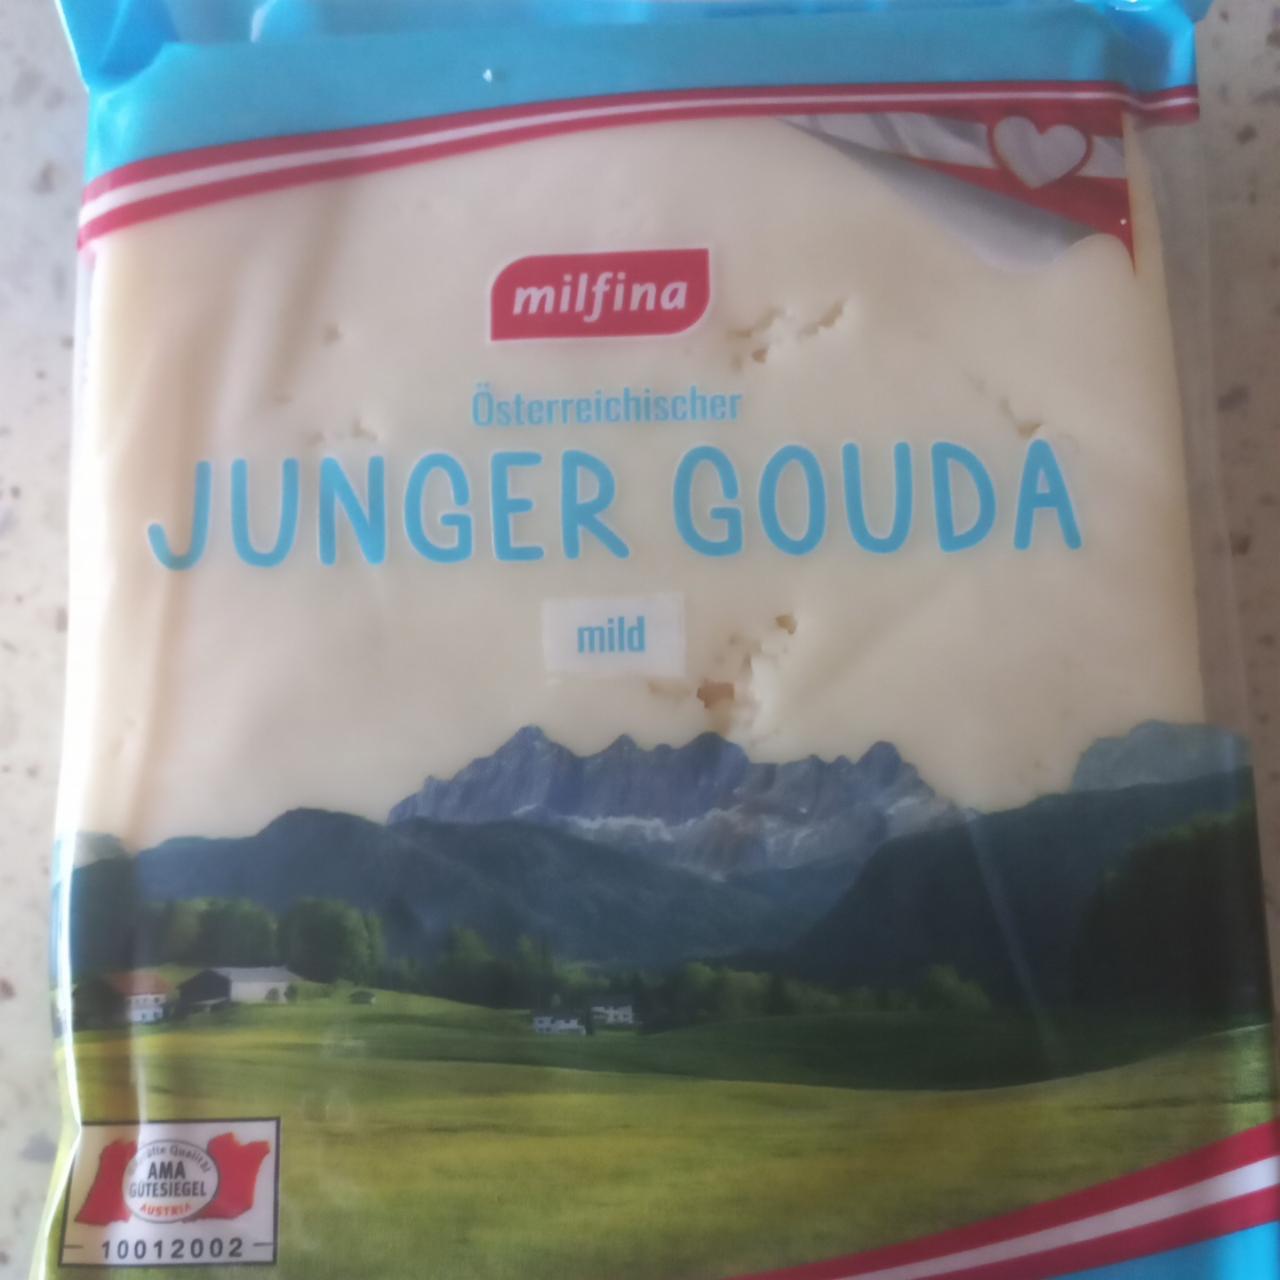 Képek - Junger gouda mild Milfina